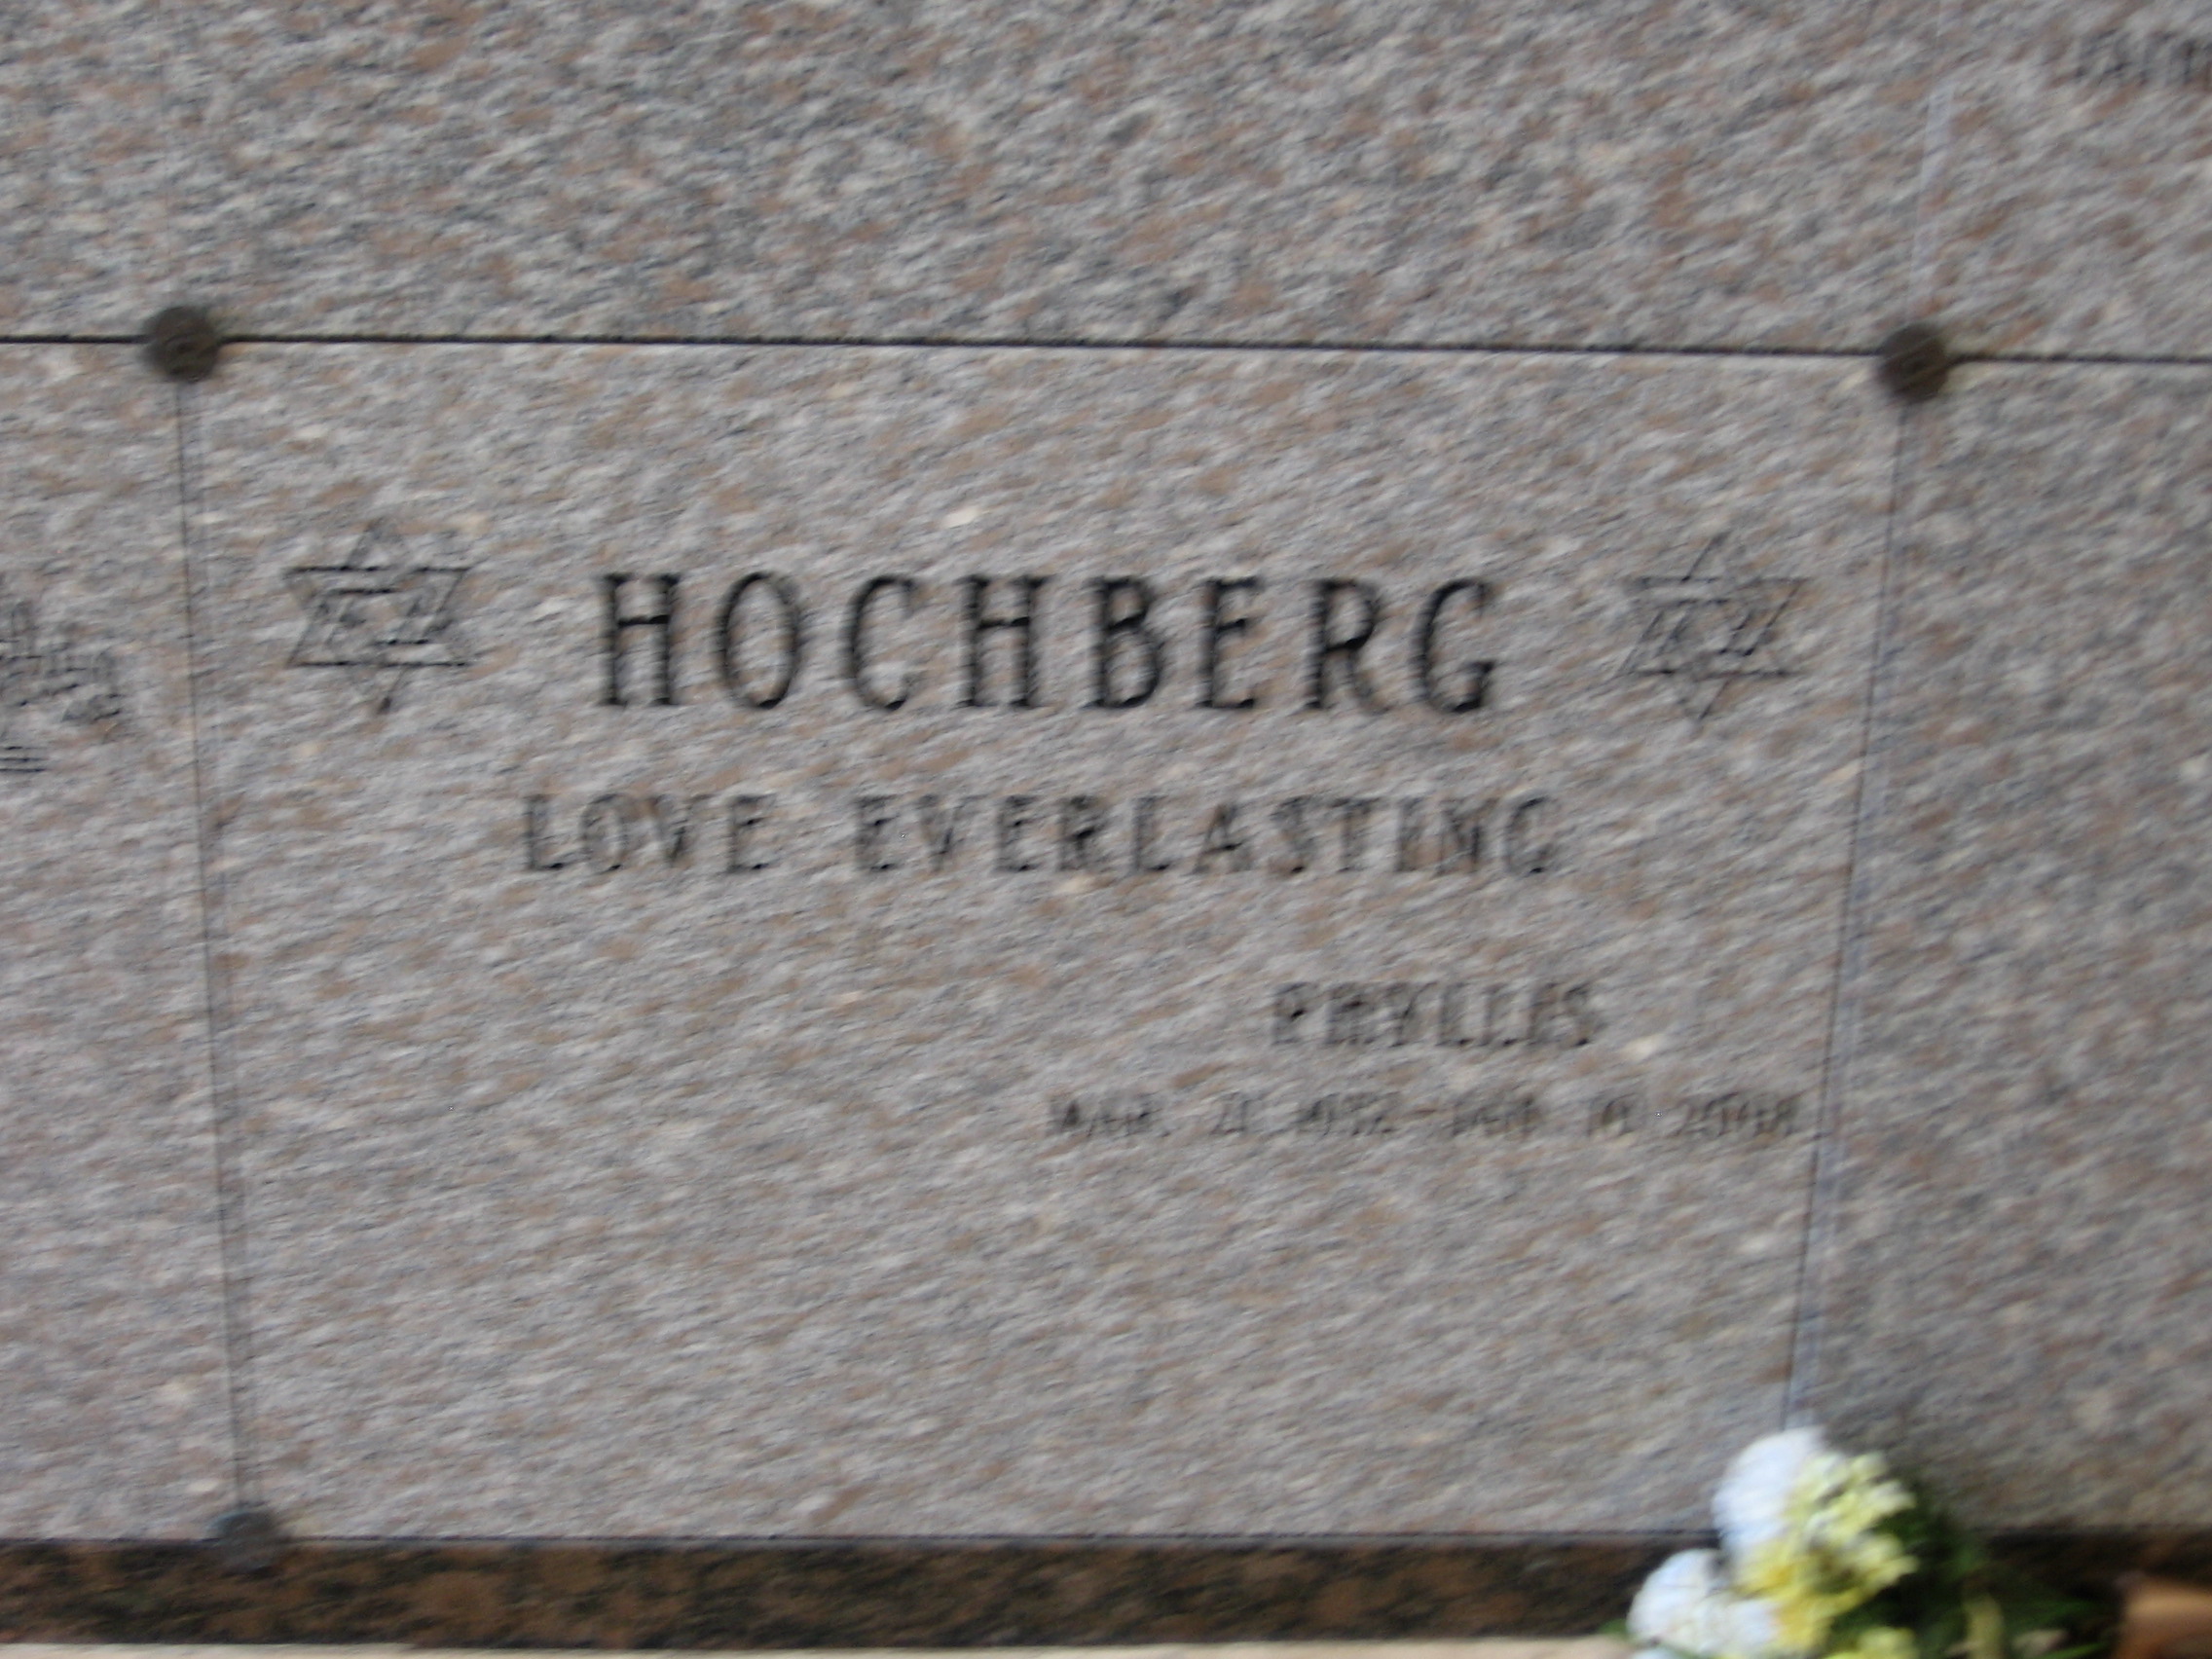 Phyllis Hochberg